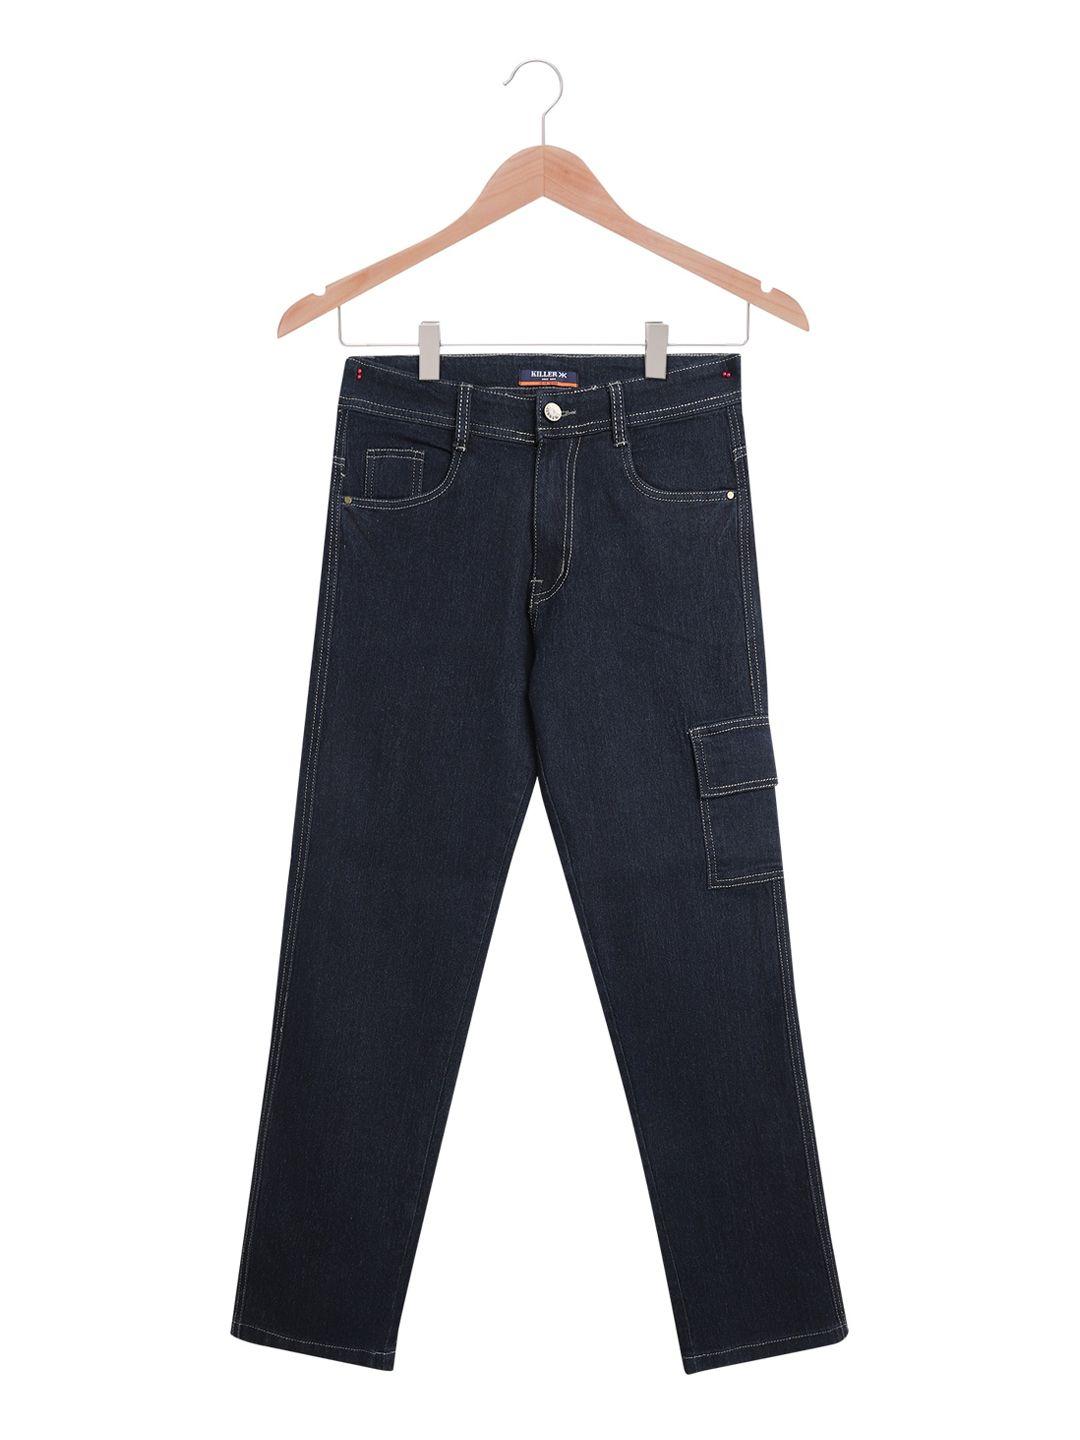 killer-boys-clean-look-mid-rise-cotton-jeans